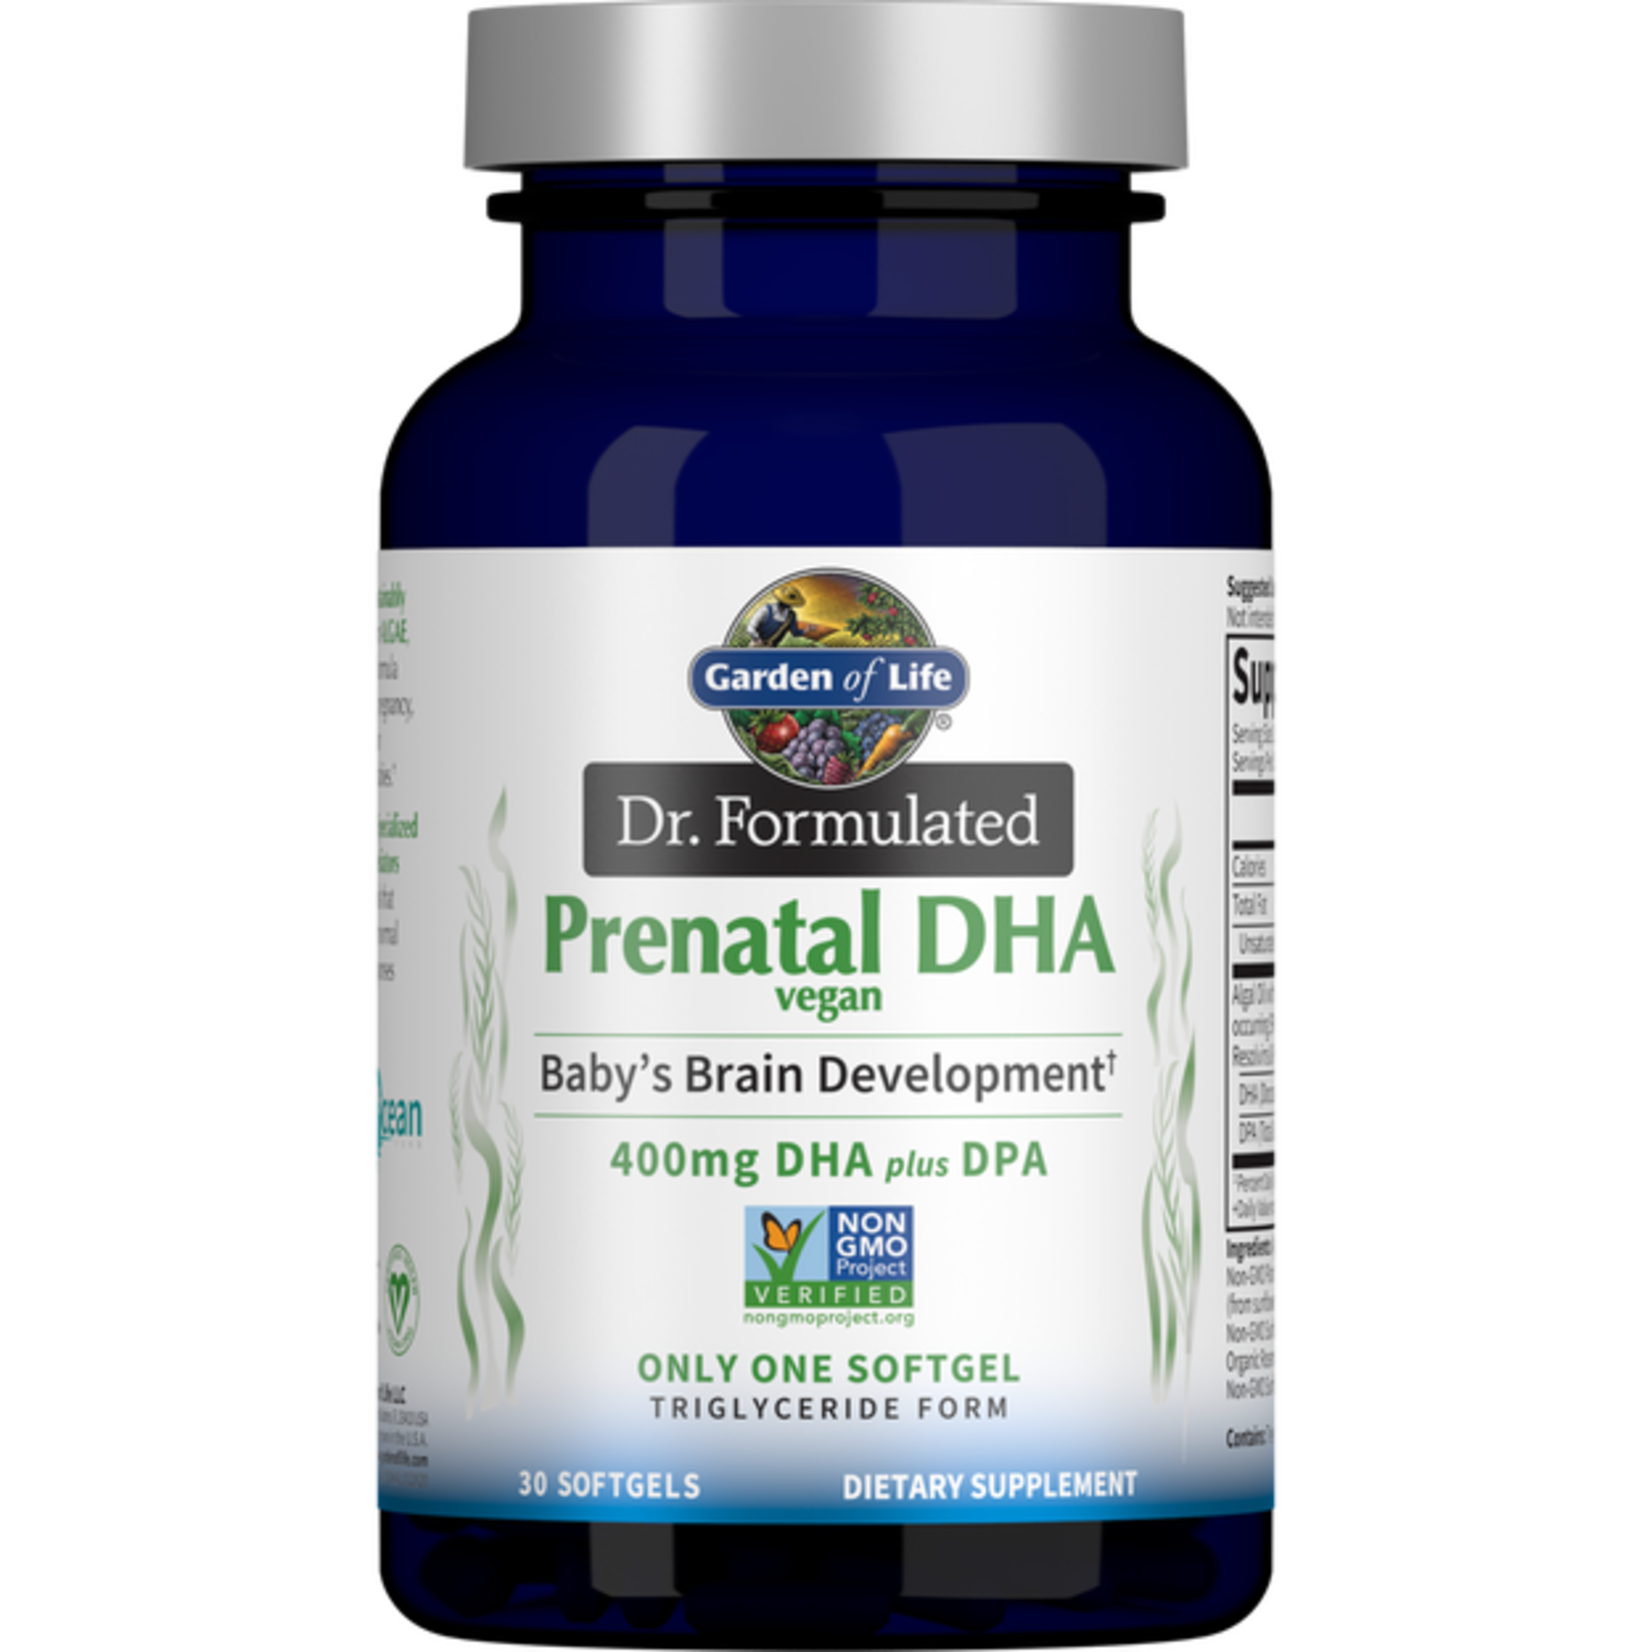 Garden of Life Garden of Life - Dr. Formulated Prenatal Dha Vegan 400 mg Dha Plus Dpa - 30 Softgels